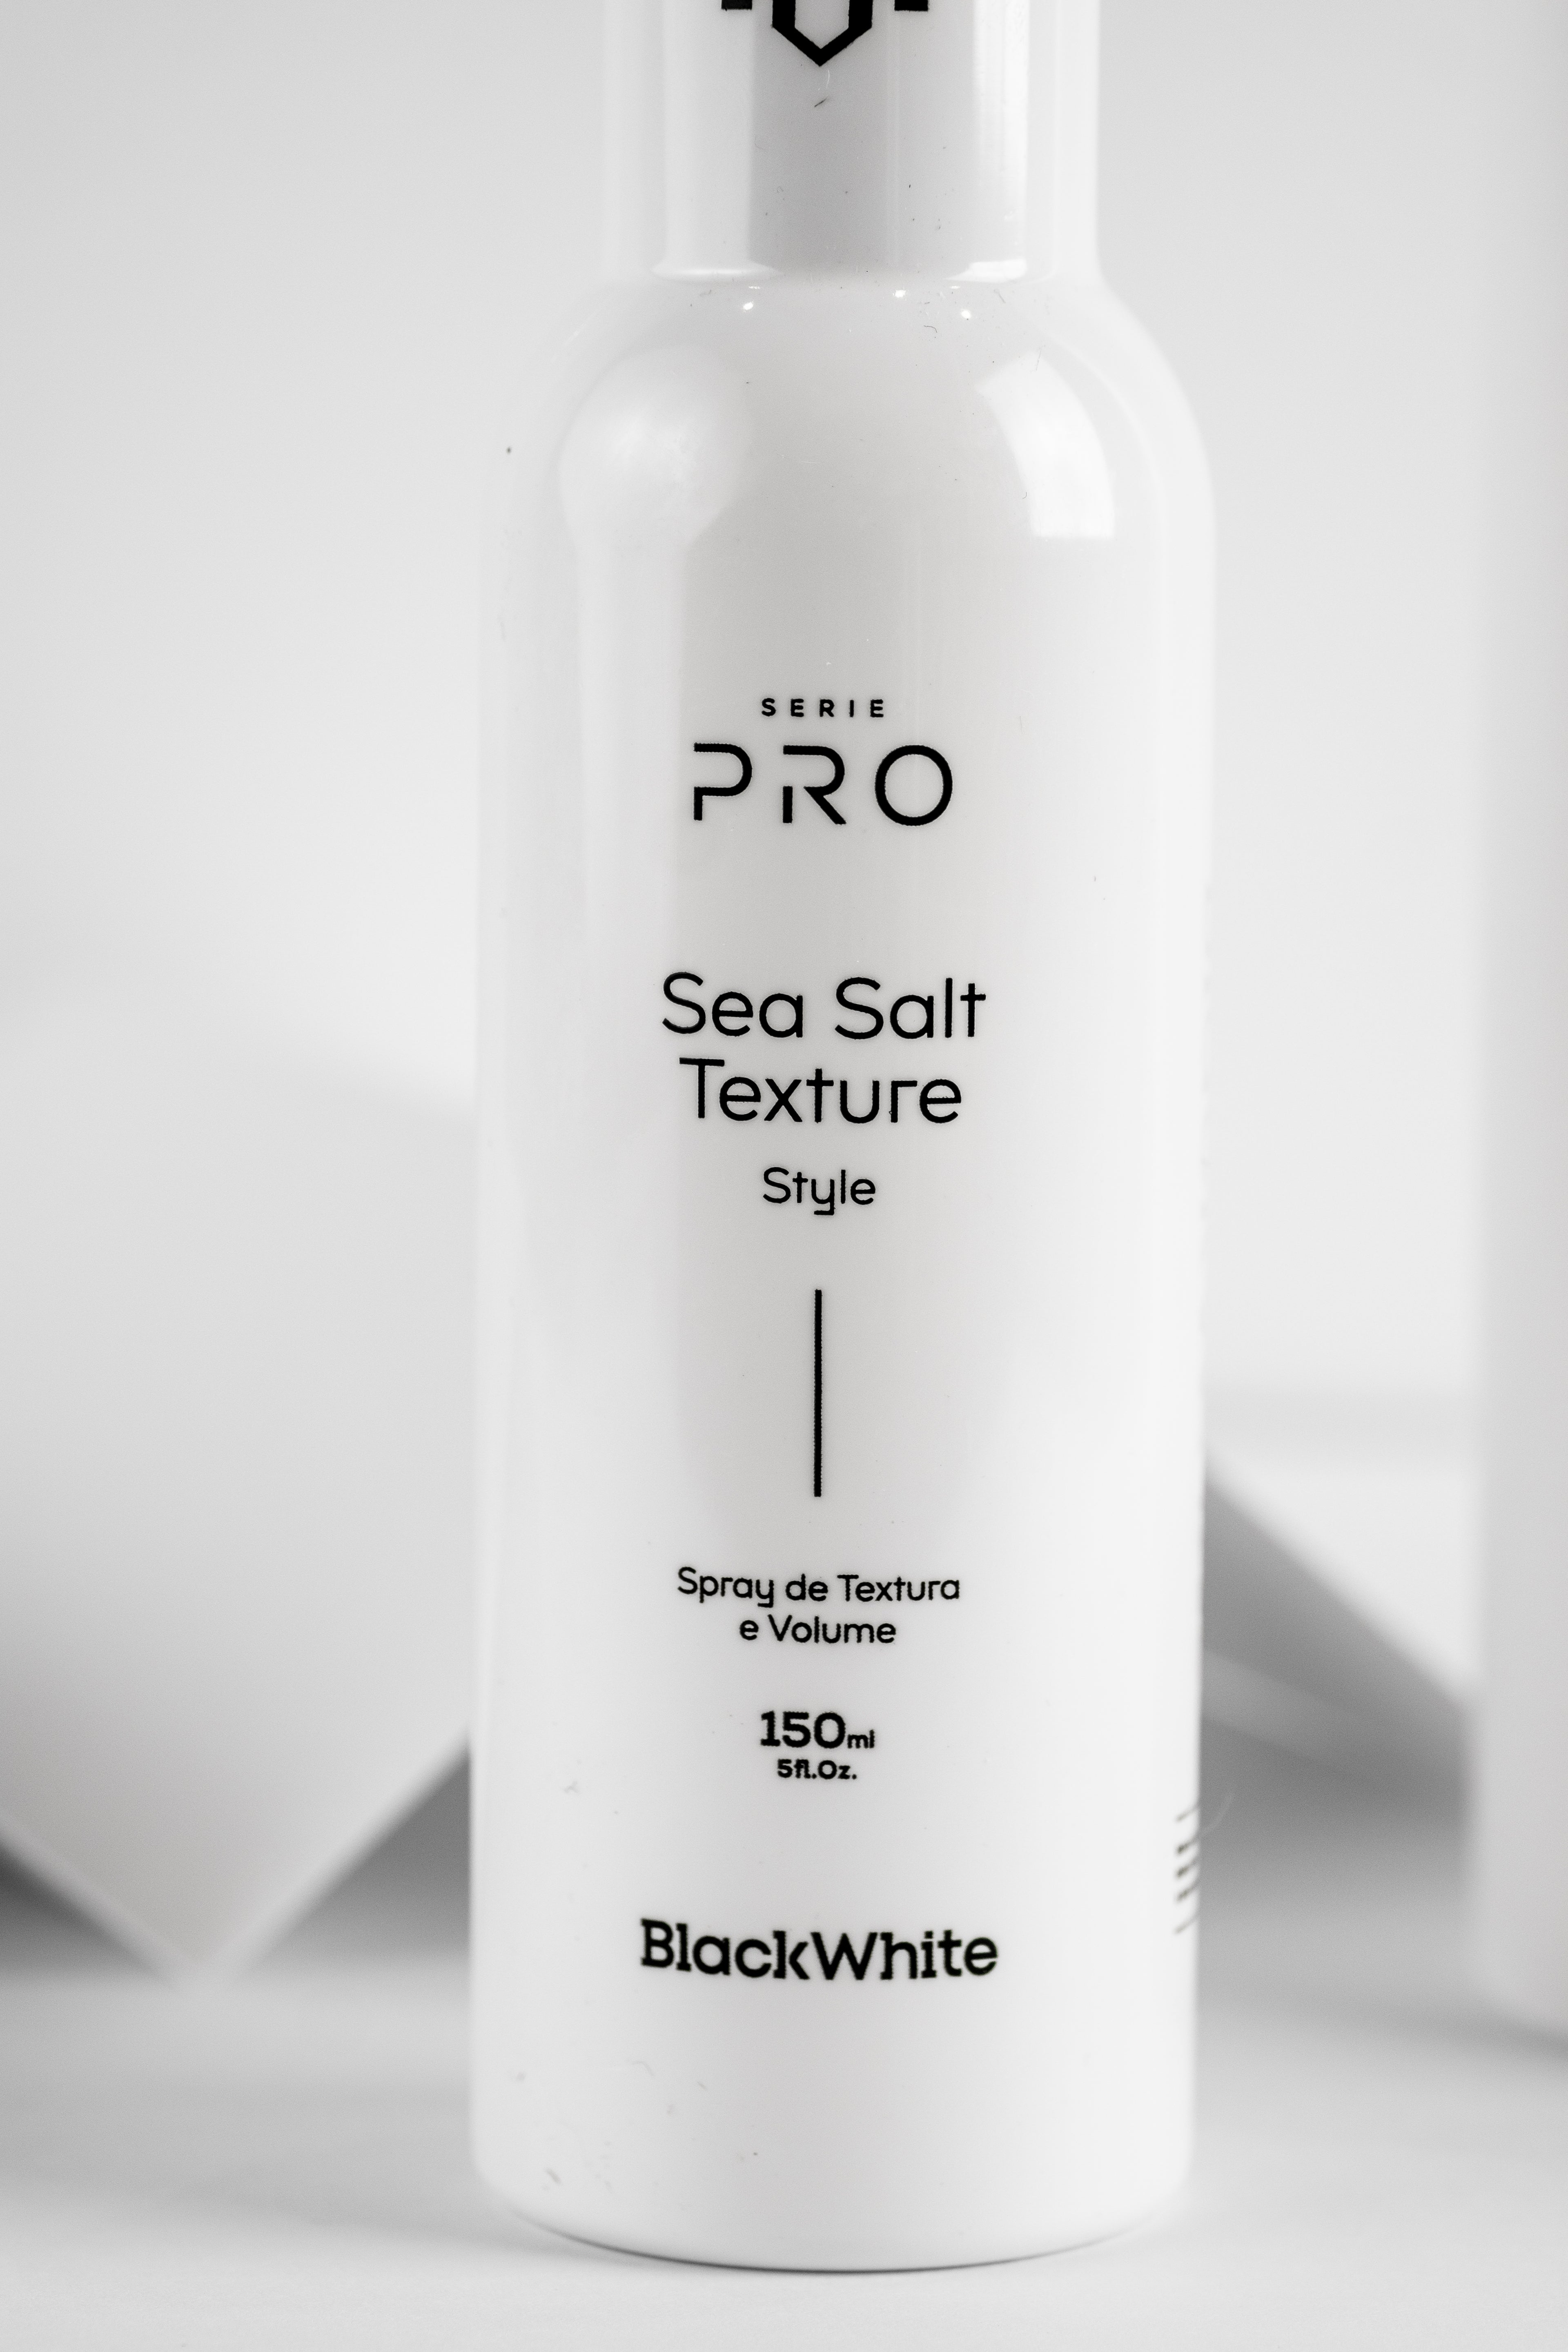 Sea Salt Texture Serie PRO